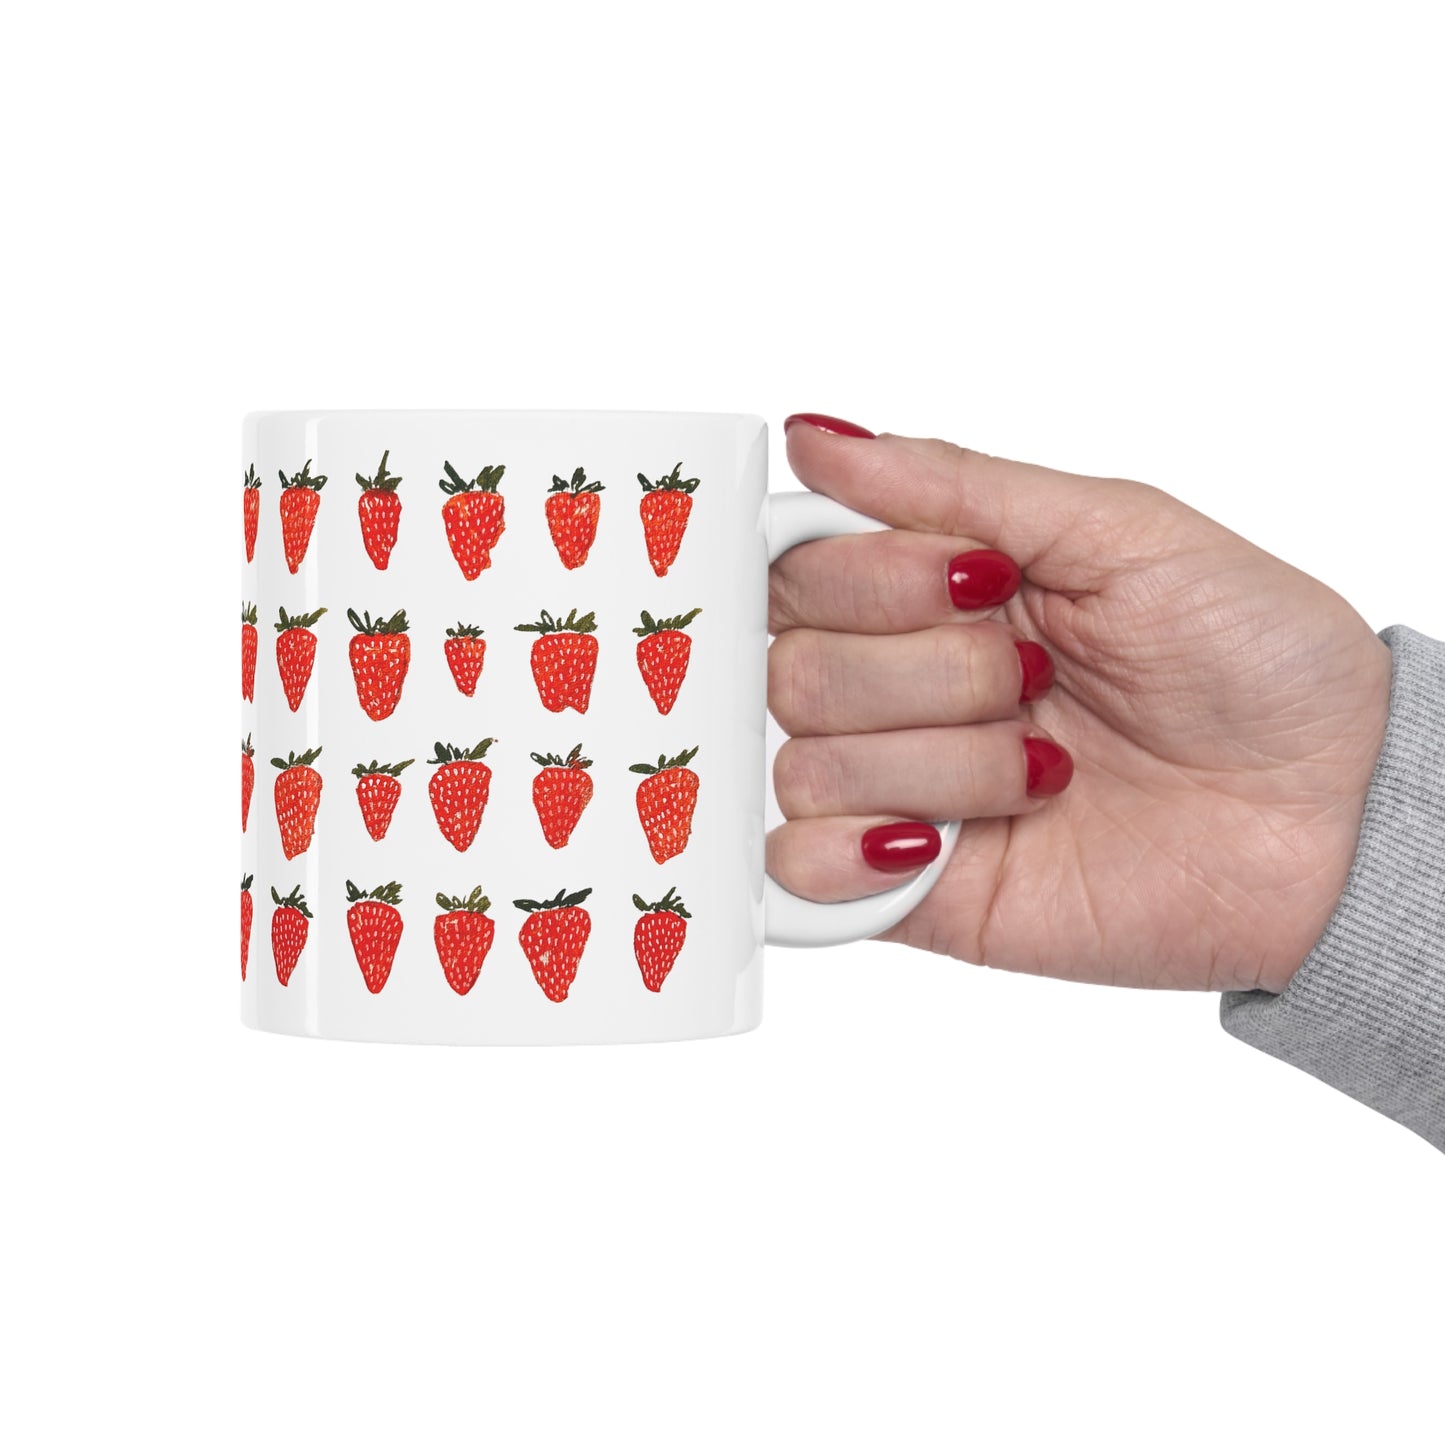 Strawberry Ceramic Mug 11oz - by Christy Beasley